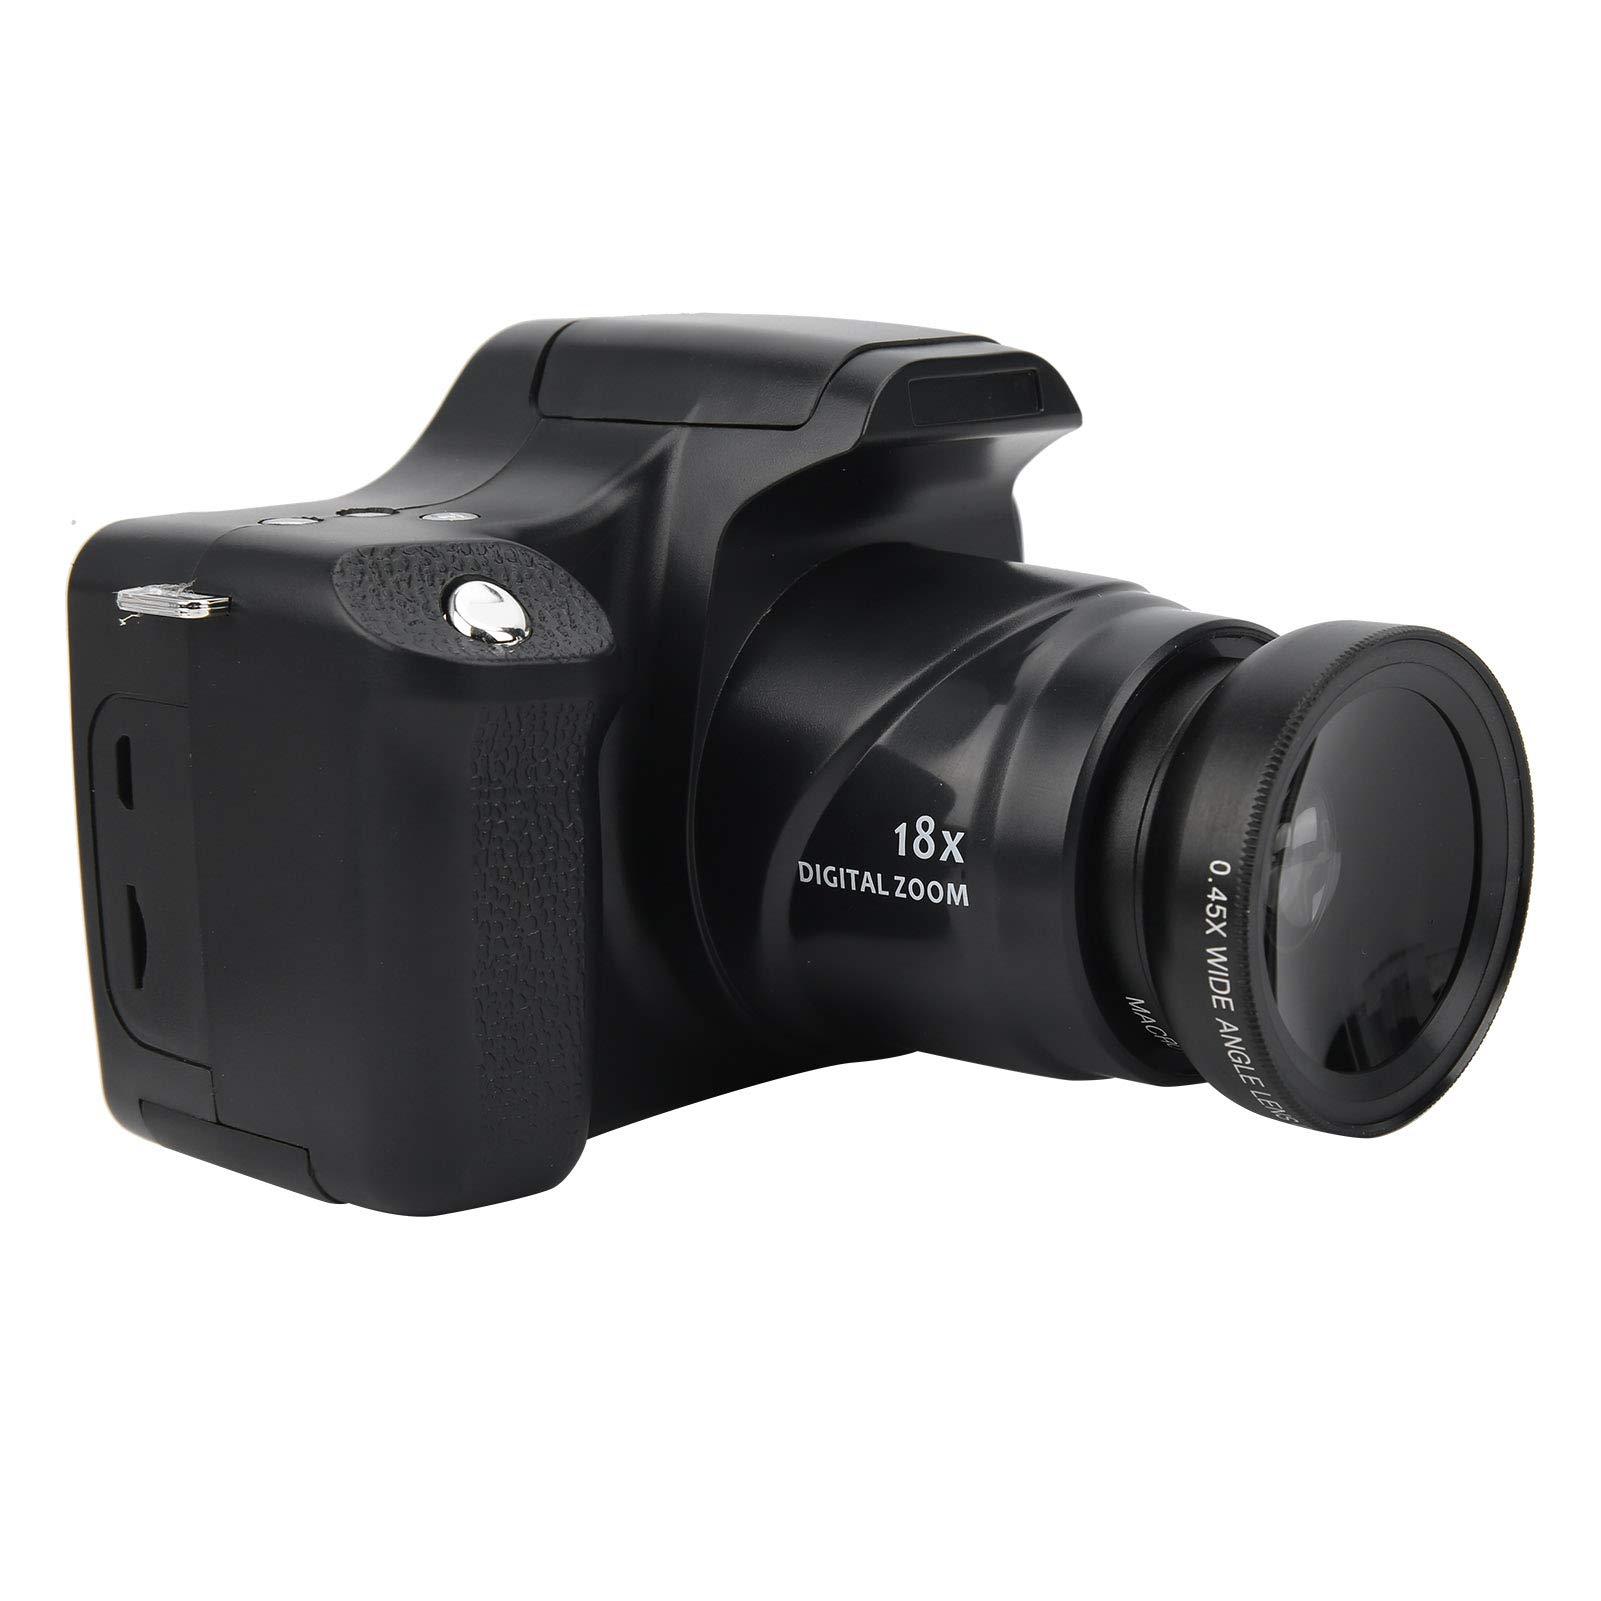 Cameras for Sale Dig 3.0 in LCD Screen 18X Zoom Hd SLR Camera Long Focal Length Portable Digital Camerastandard (Standard Edition + Wide Angle Lens)